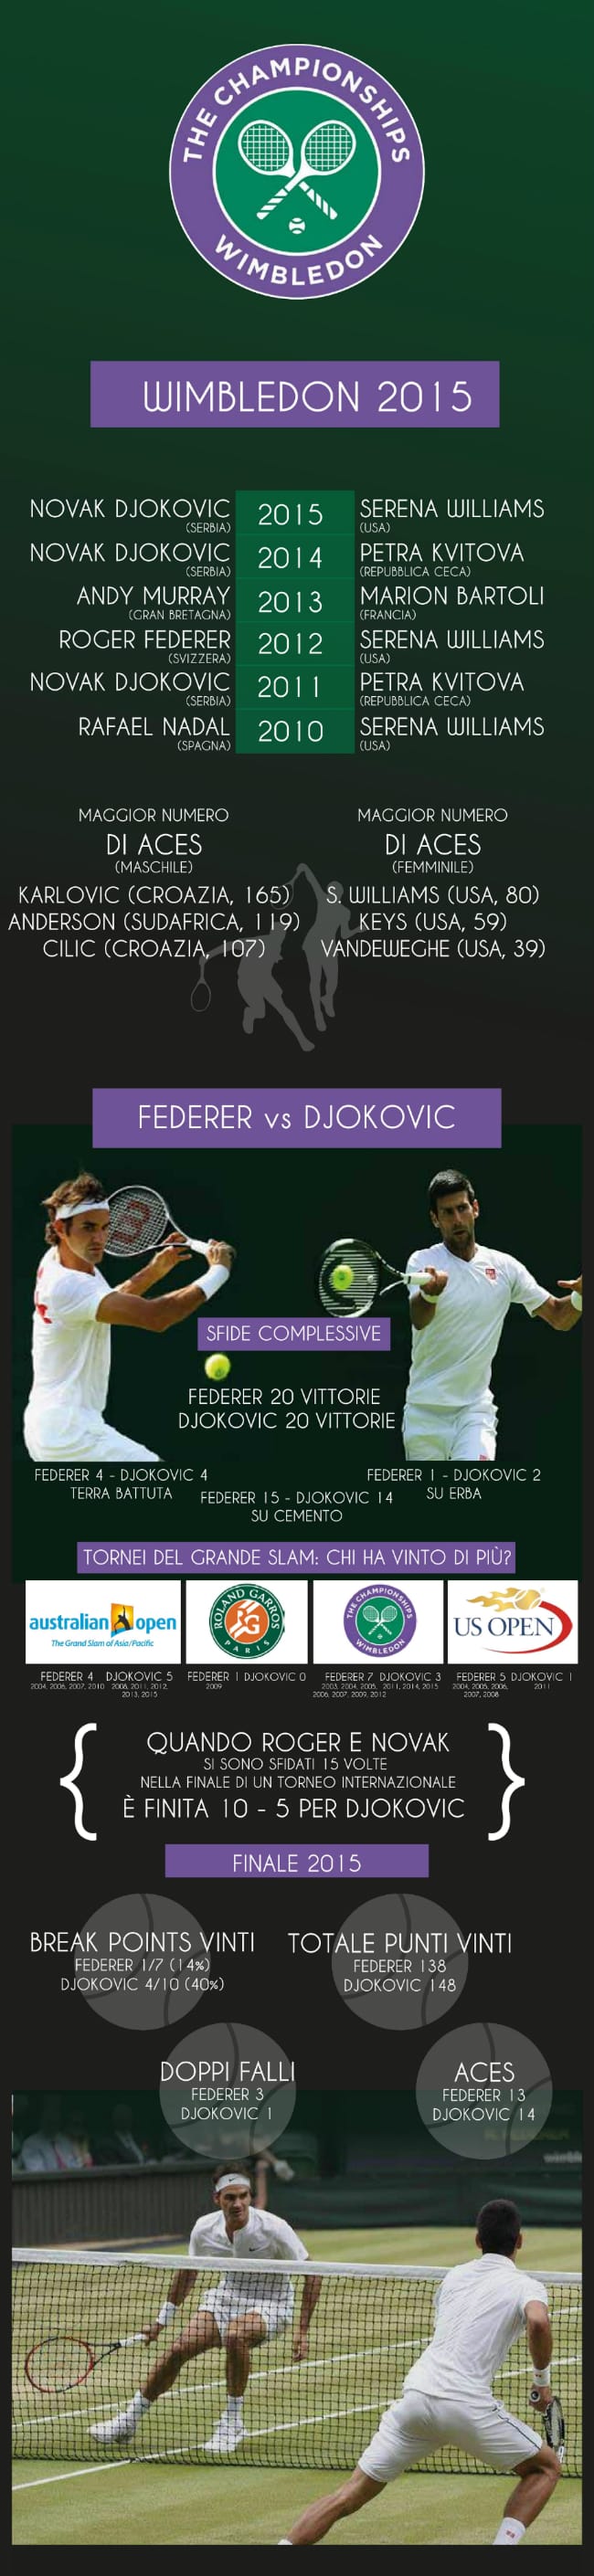 Infografica Wimbledon